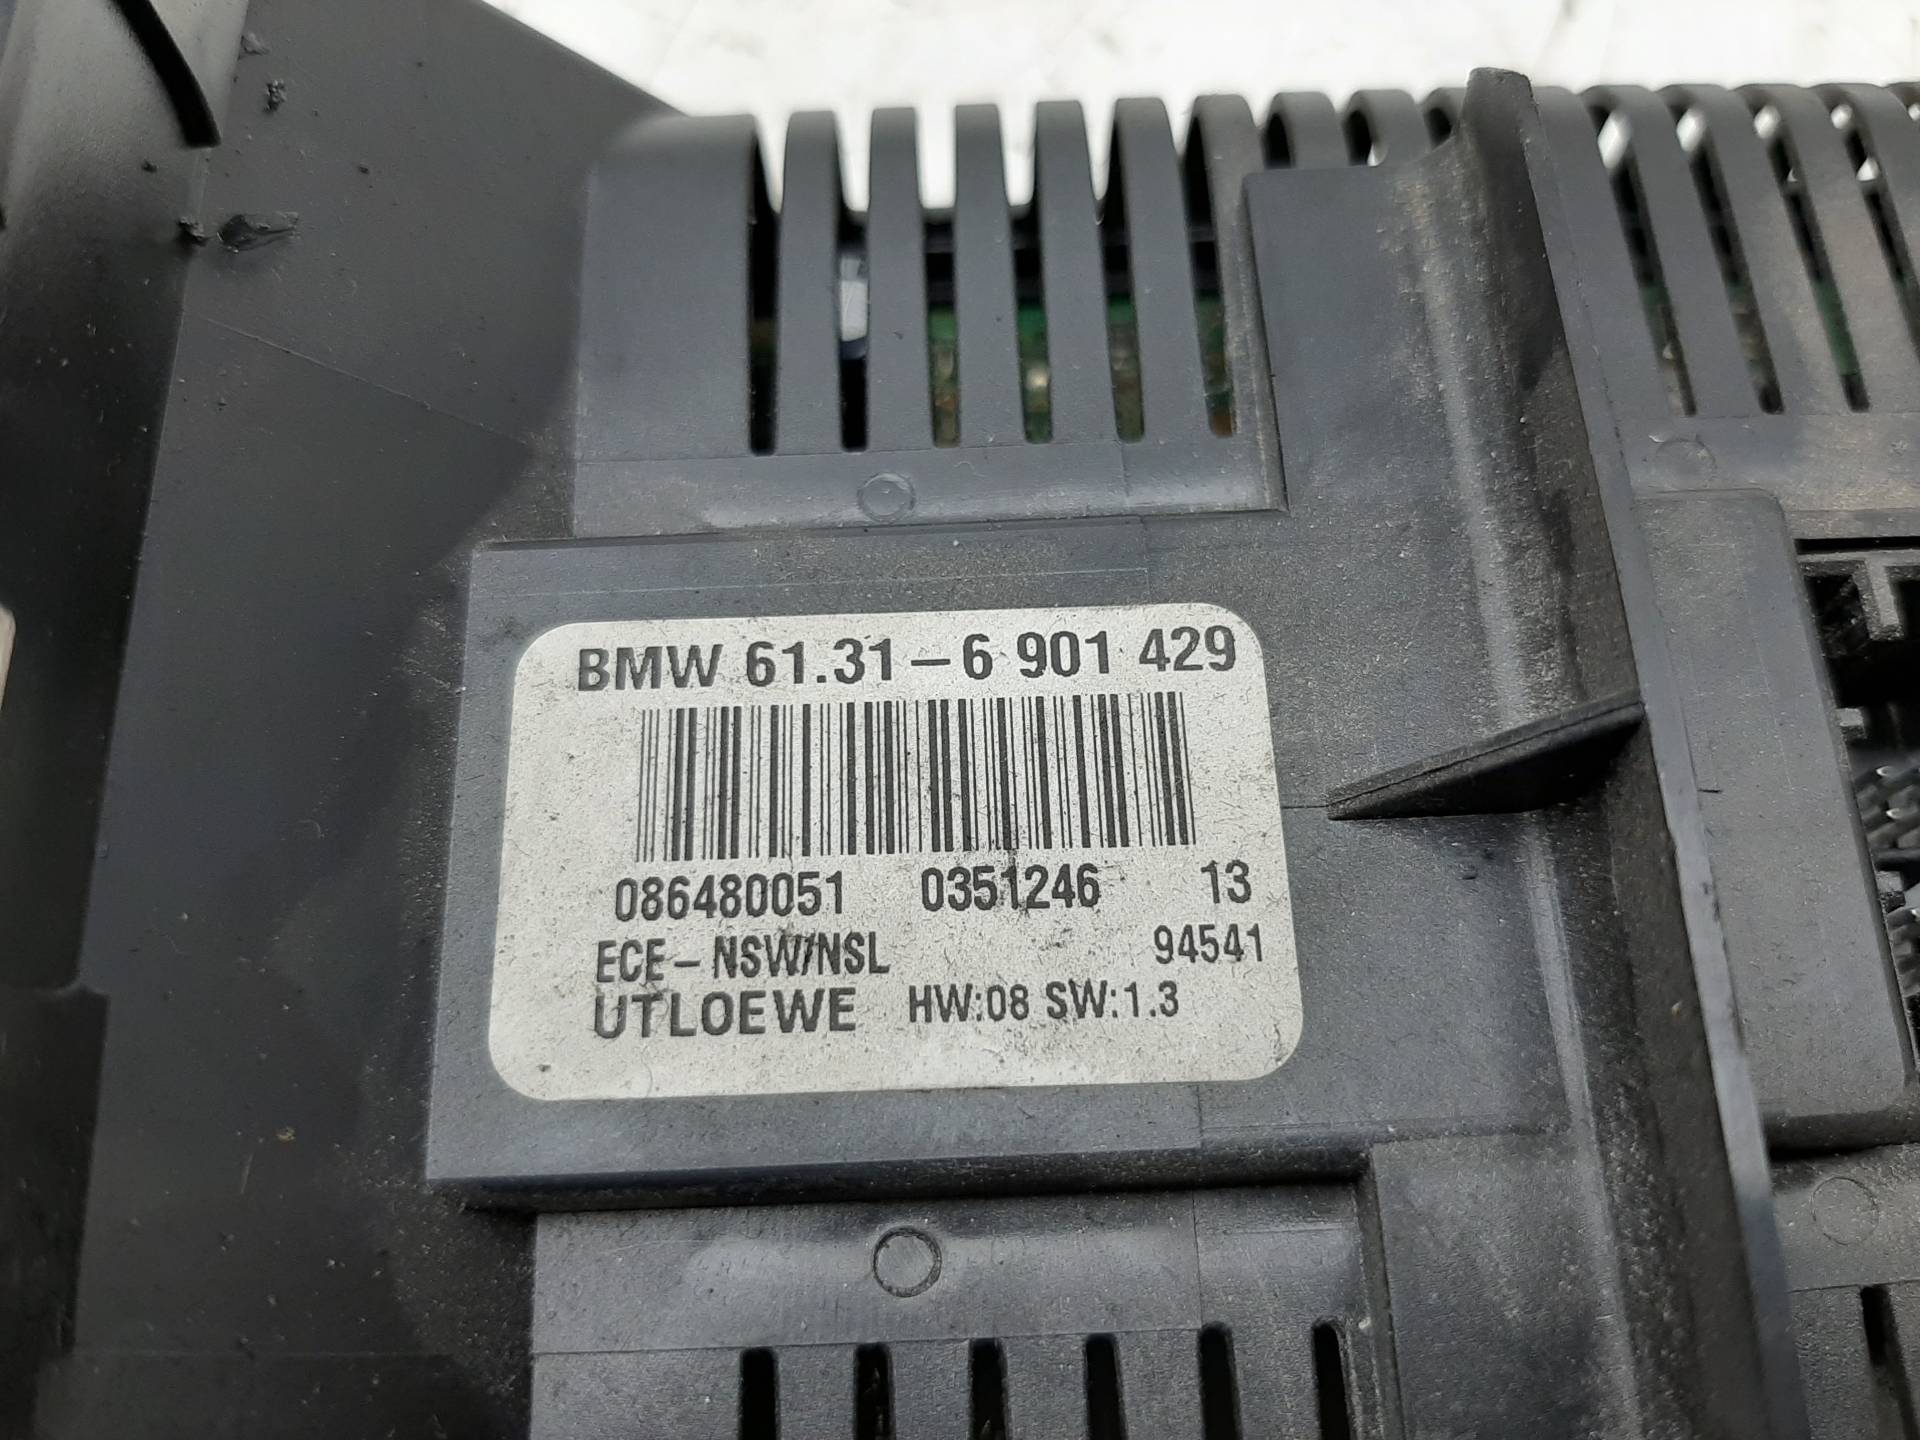 BMW 3 Series E46 (1997-2006) Headlight Switch Control Unit 61316901429 18557580